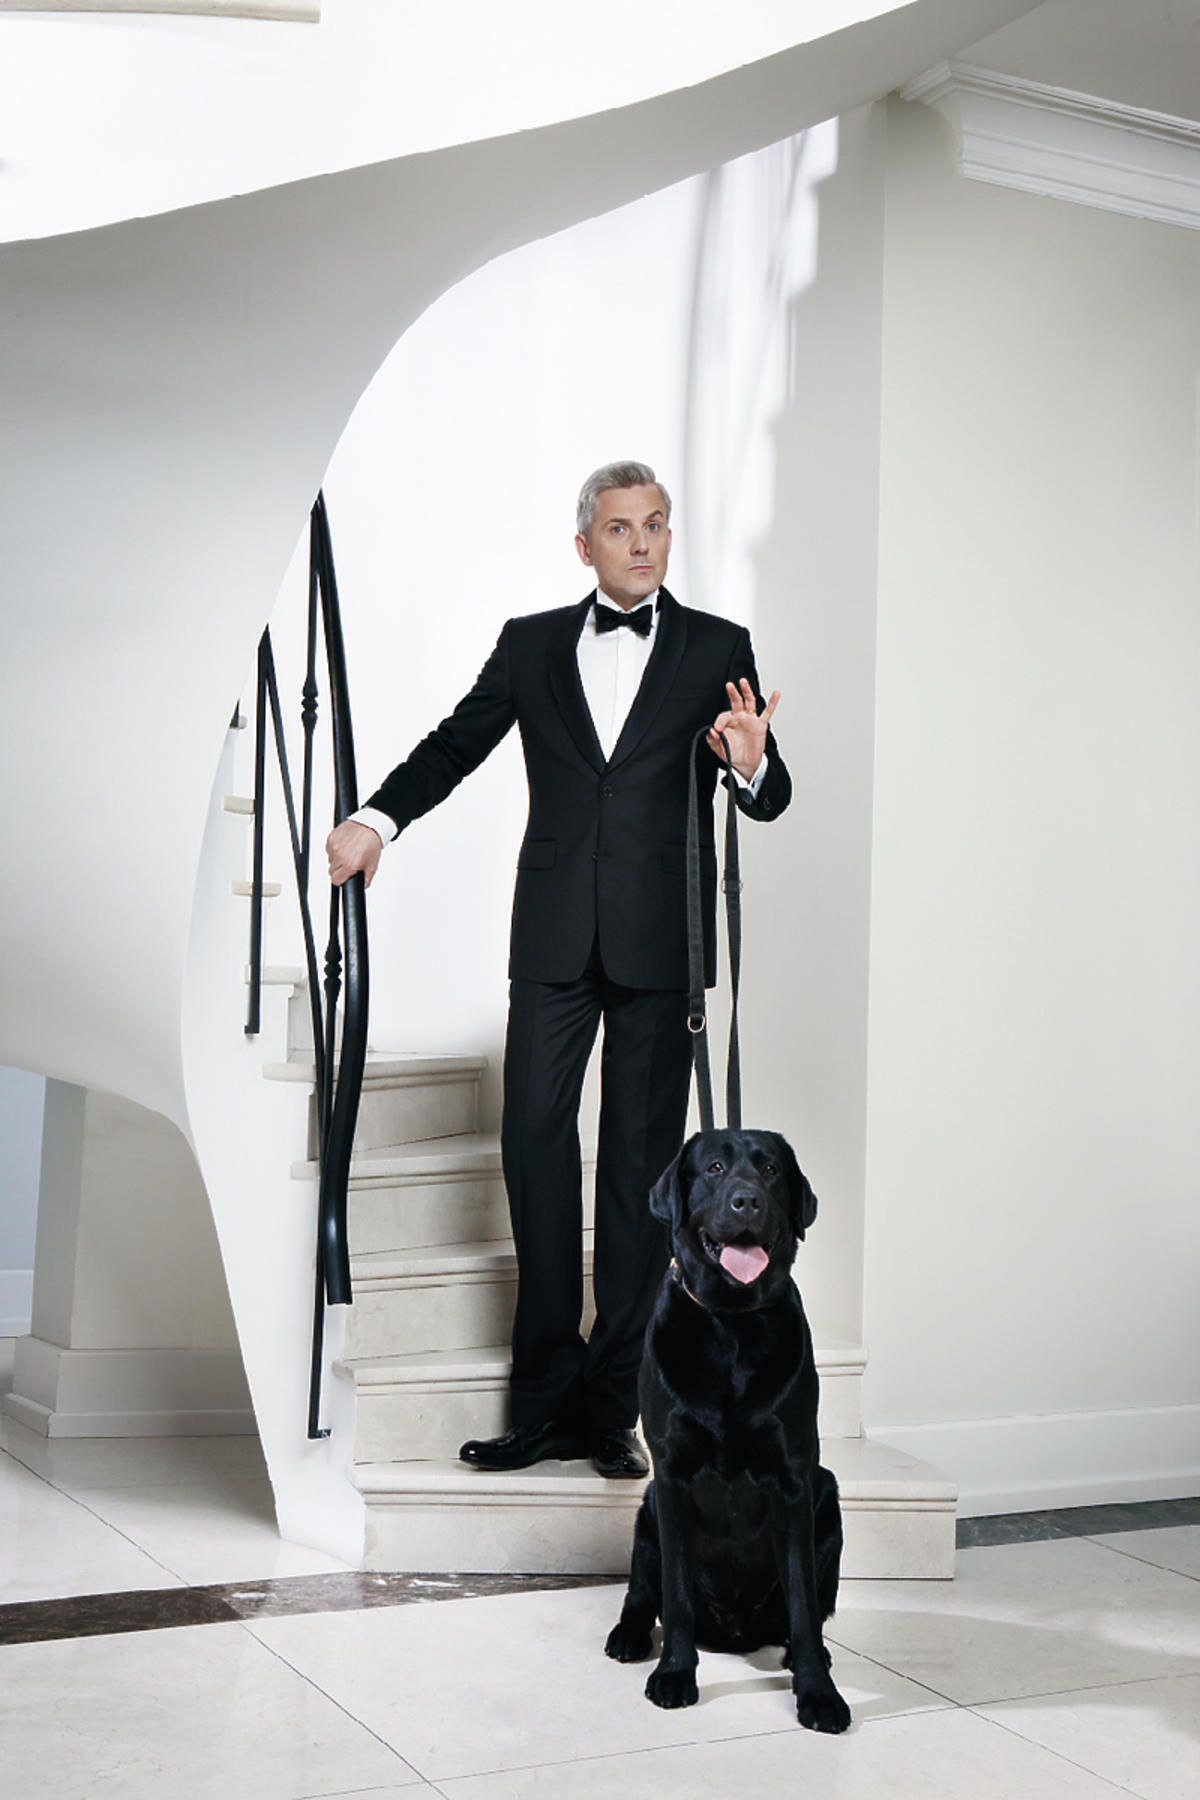 Hubert Urbański stoi na schodach z psem